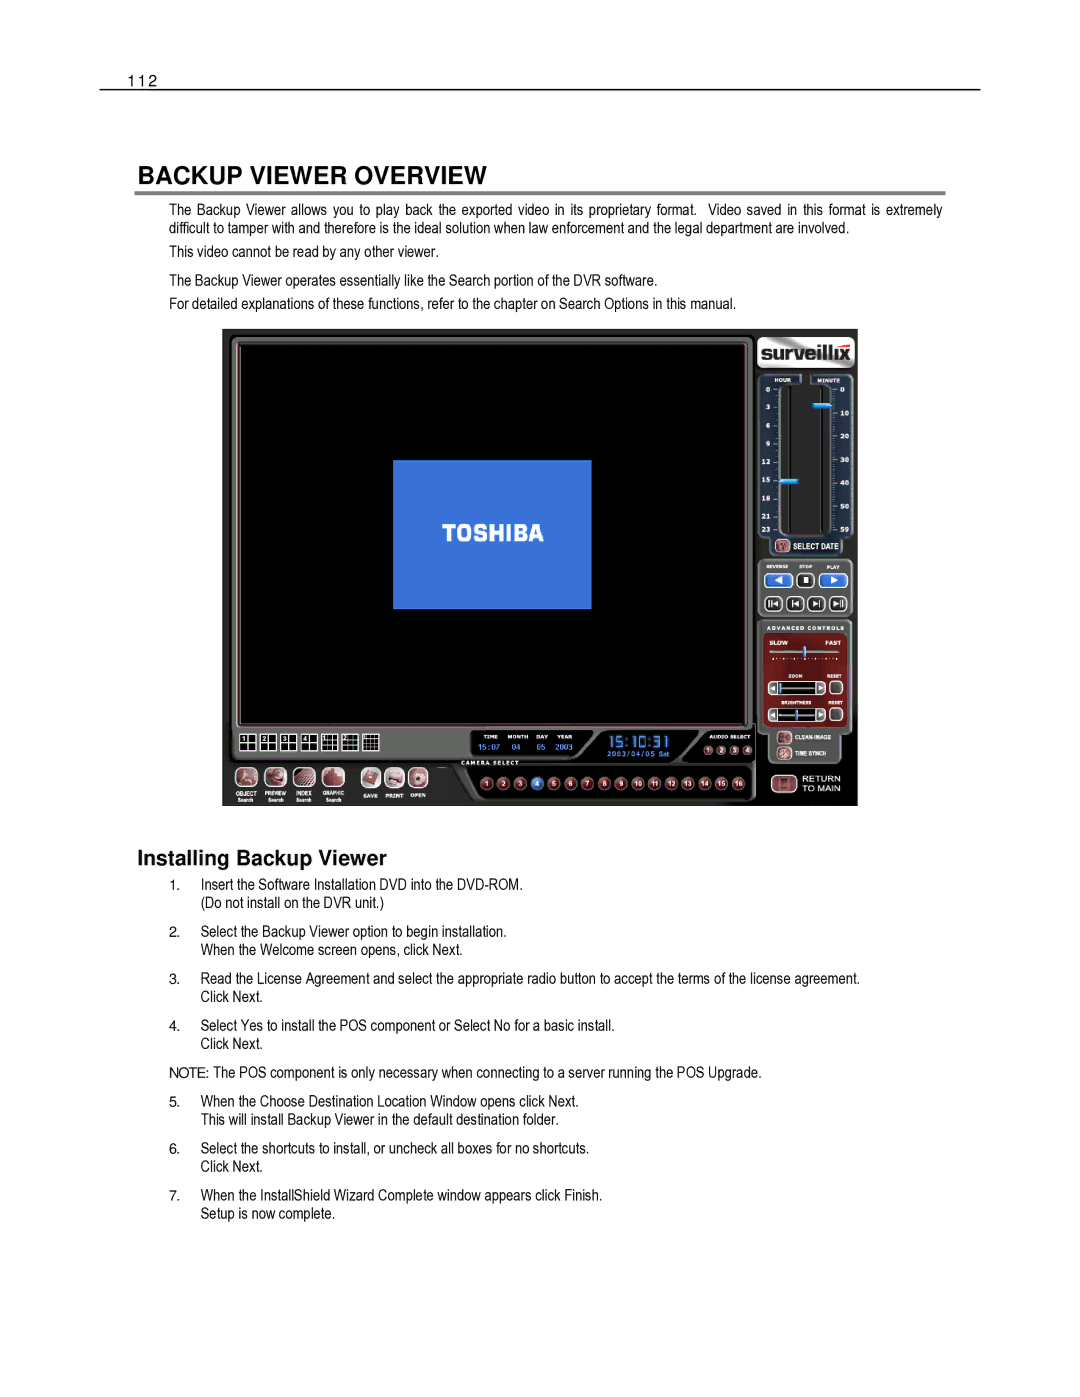 Toshiba HVR8-X, HVR32-X, HVR16-X user manual Backup Viewer Overview, Installing Backup Viewer, 112 